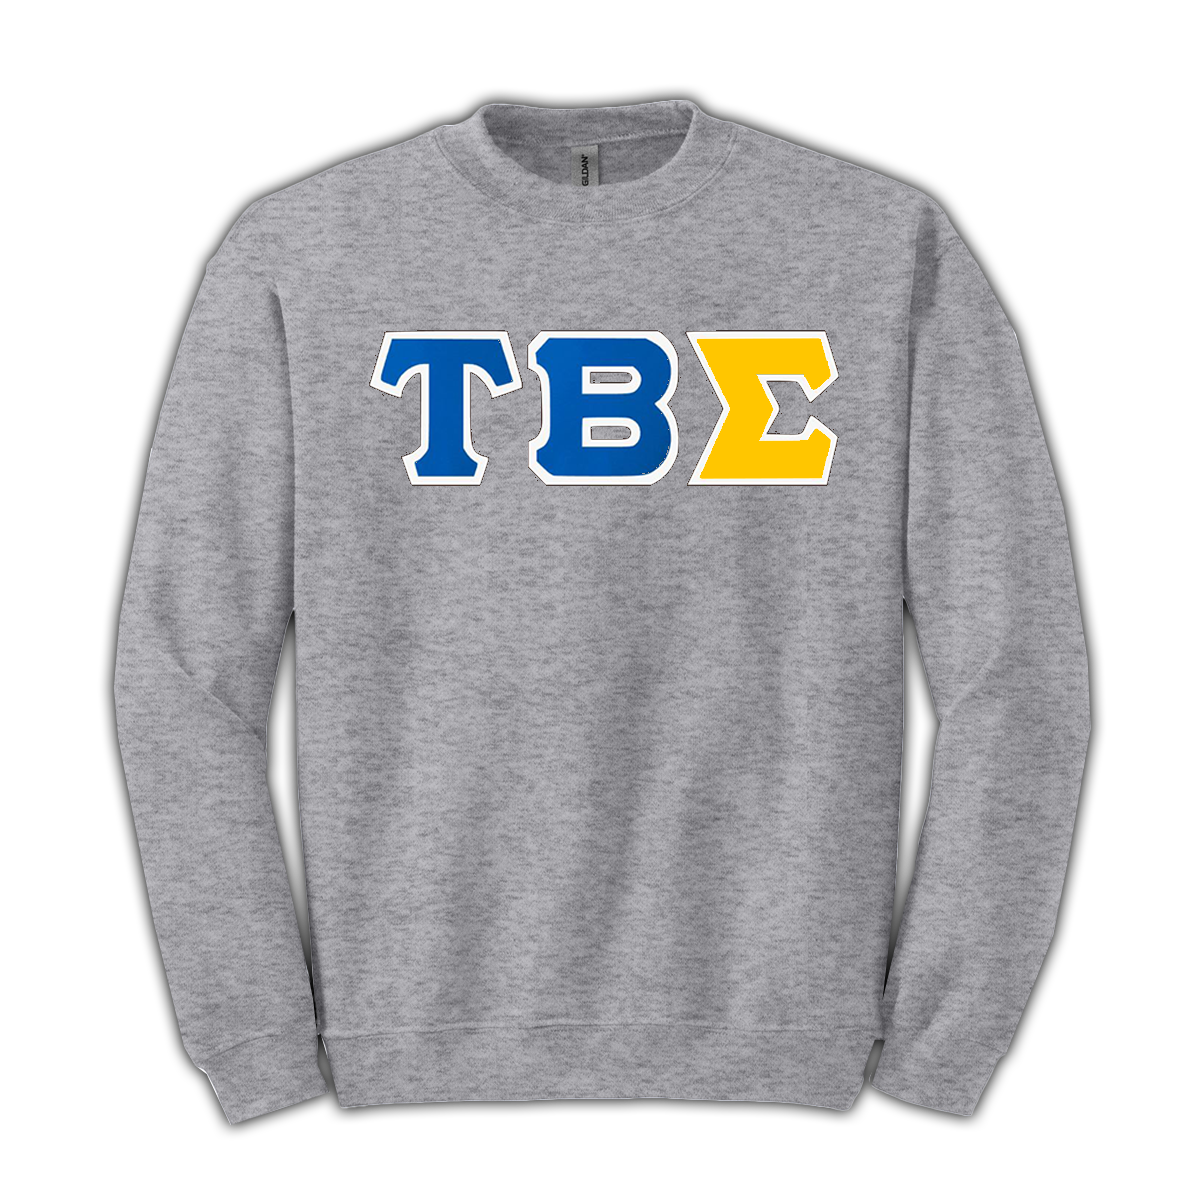 Tau Beta Sigma Standards Crewneck Sweatshirt - G180 - TWILL